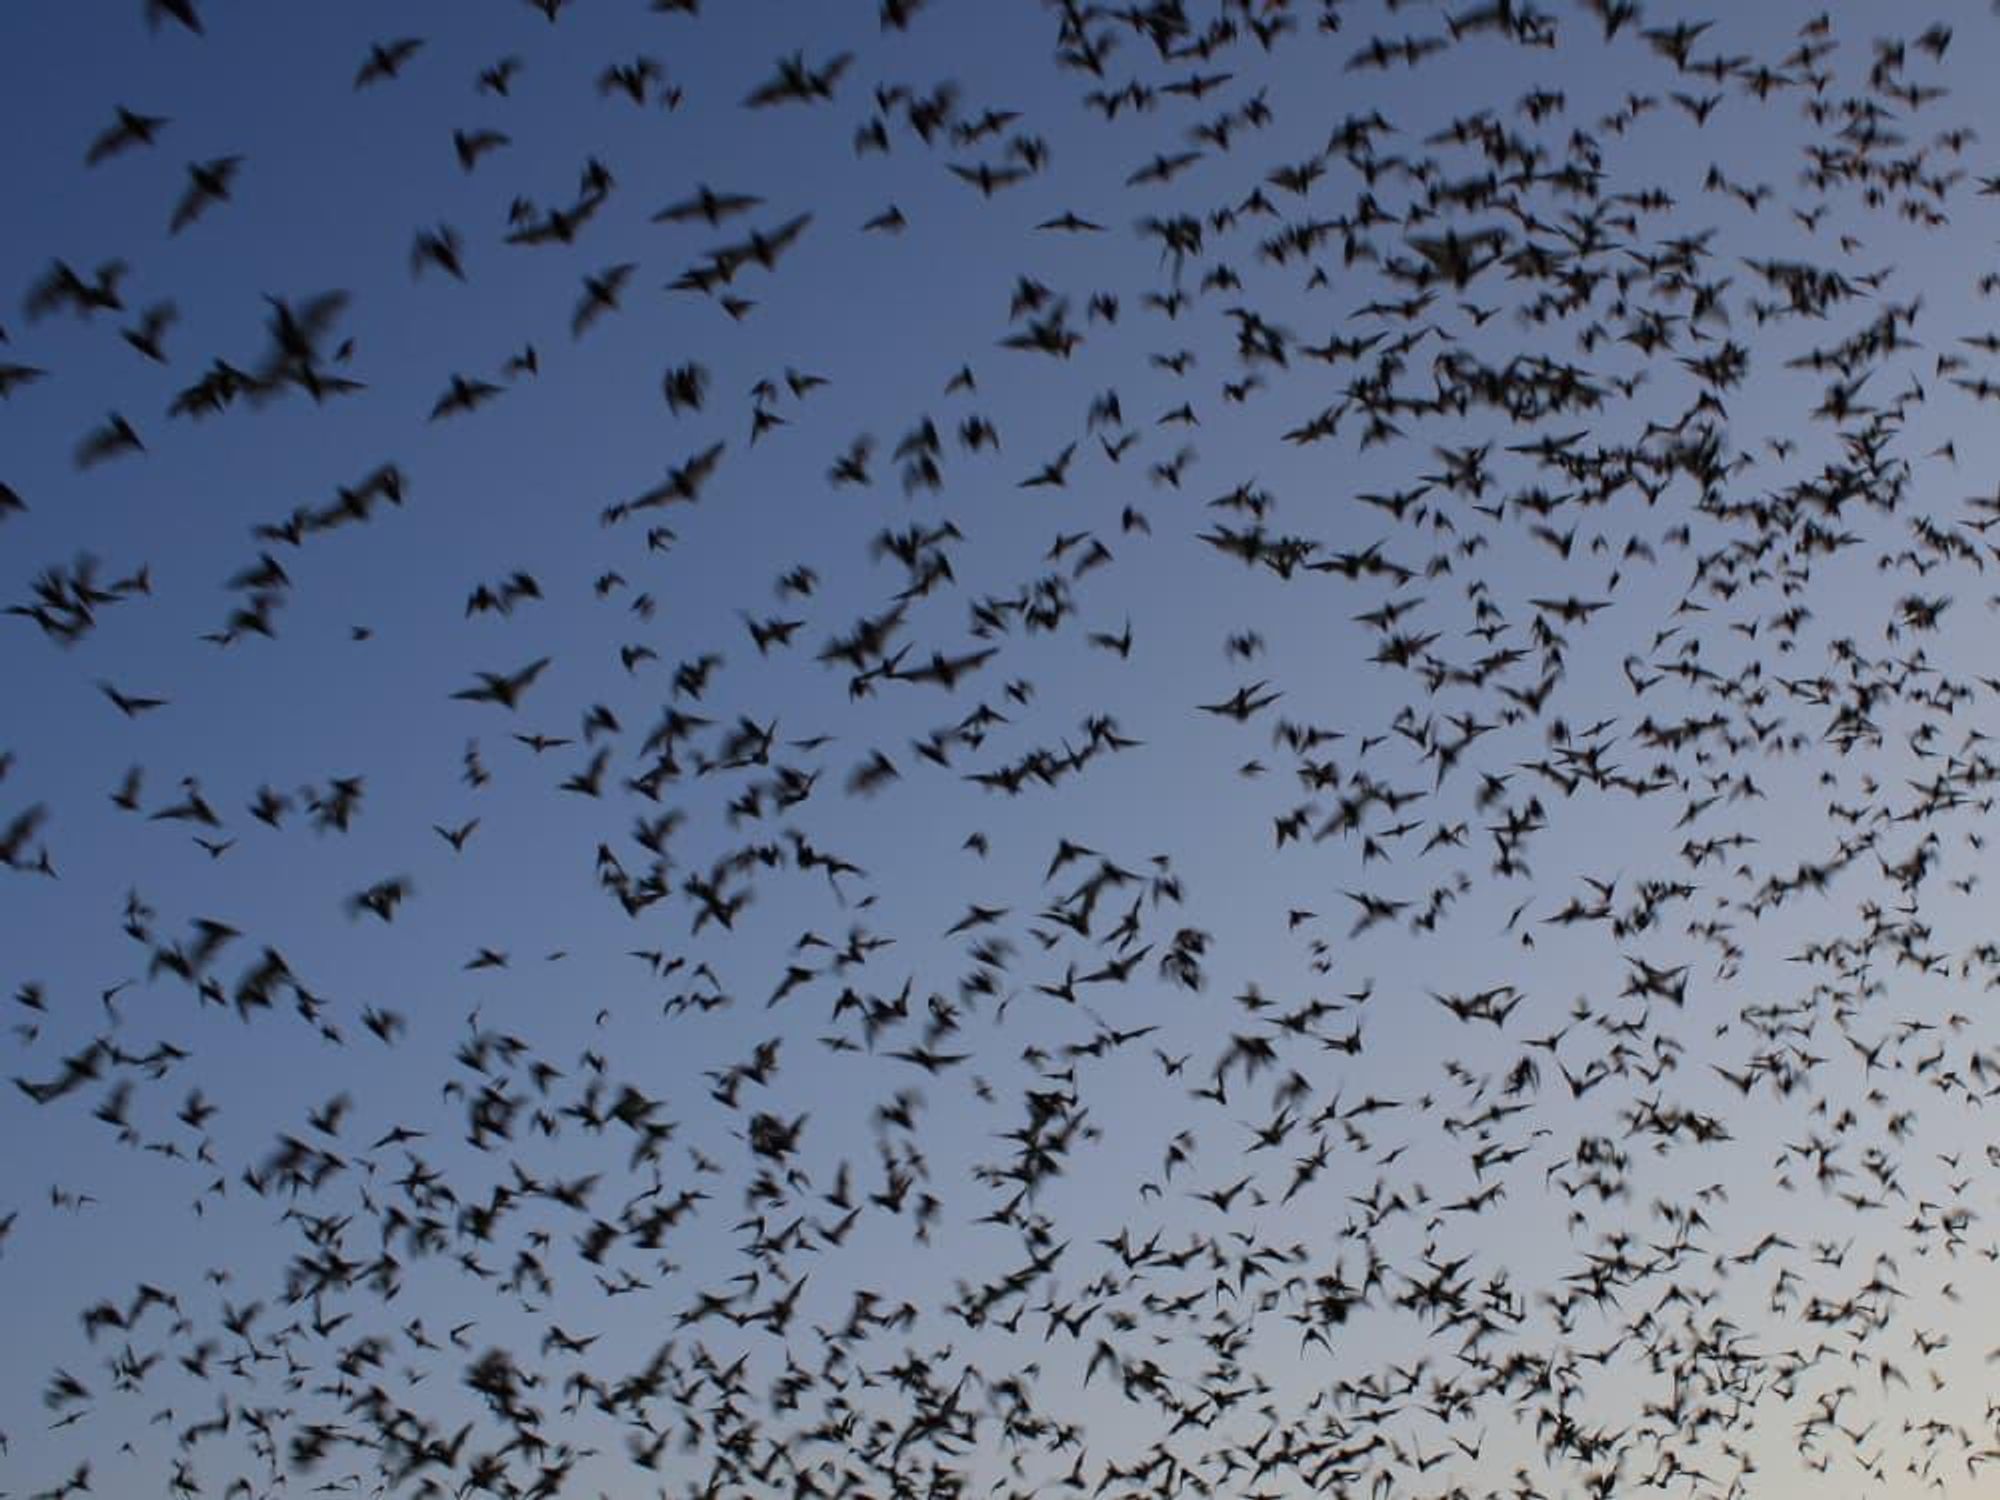 bats, Mexican free-tail bats